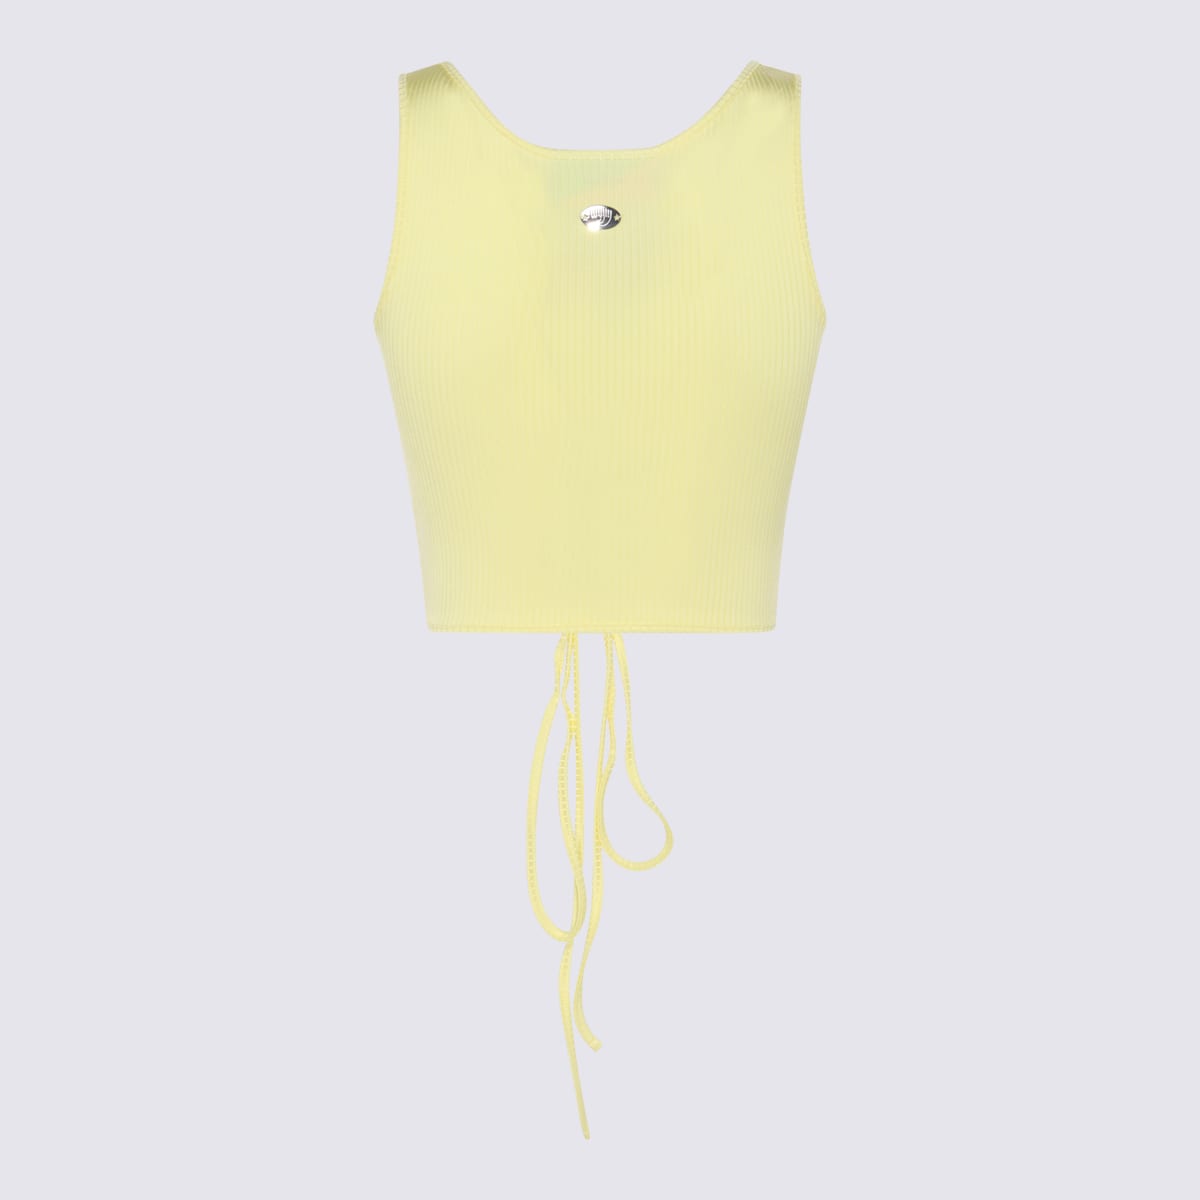 Chiara Ferragni Wax Yellow Cotton Stretch Top